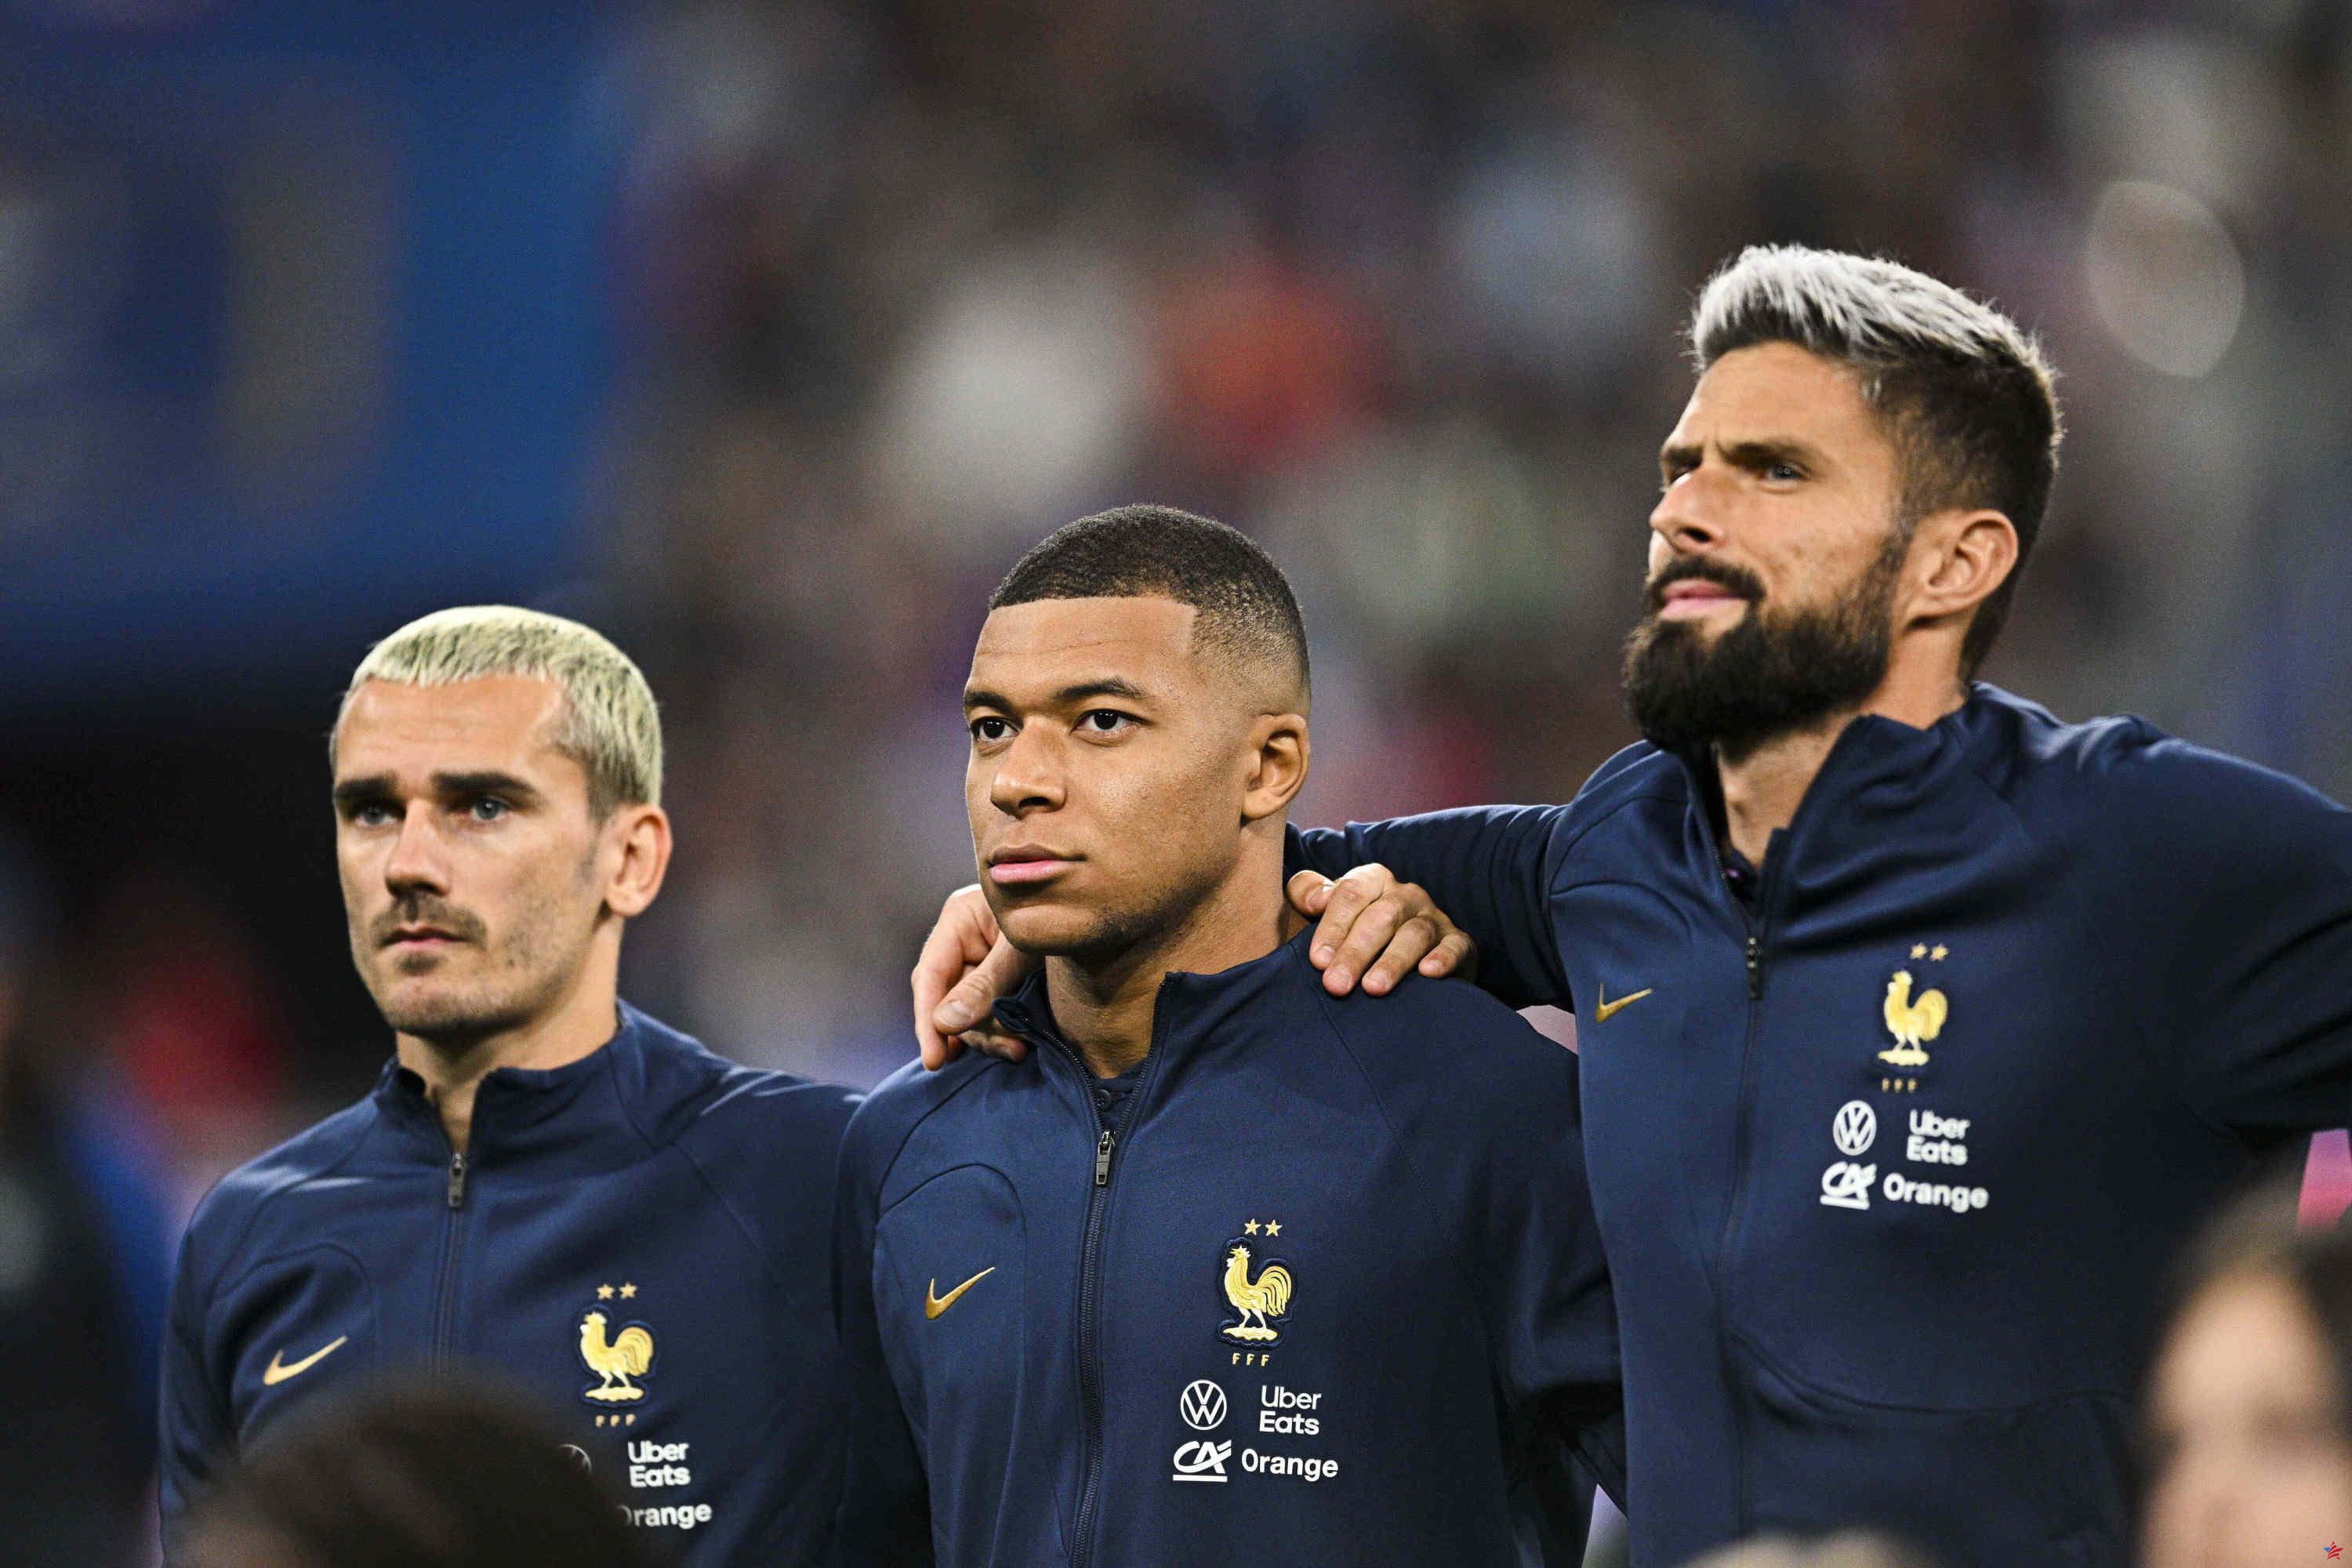 Juegos Olímpicos de París 2024: Thierry Henry prevé priorizar a Mbappé, Griezmann y Giroud